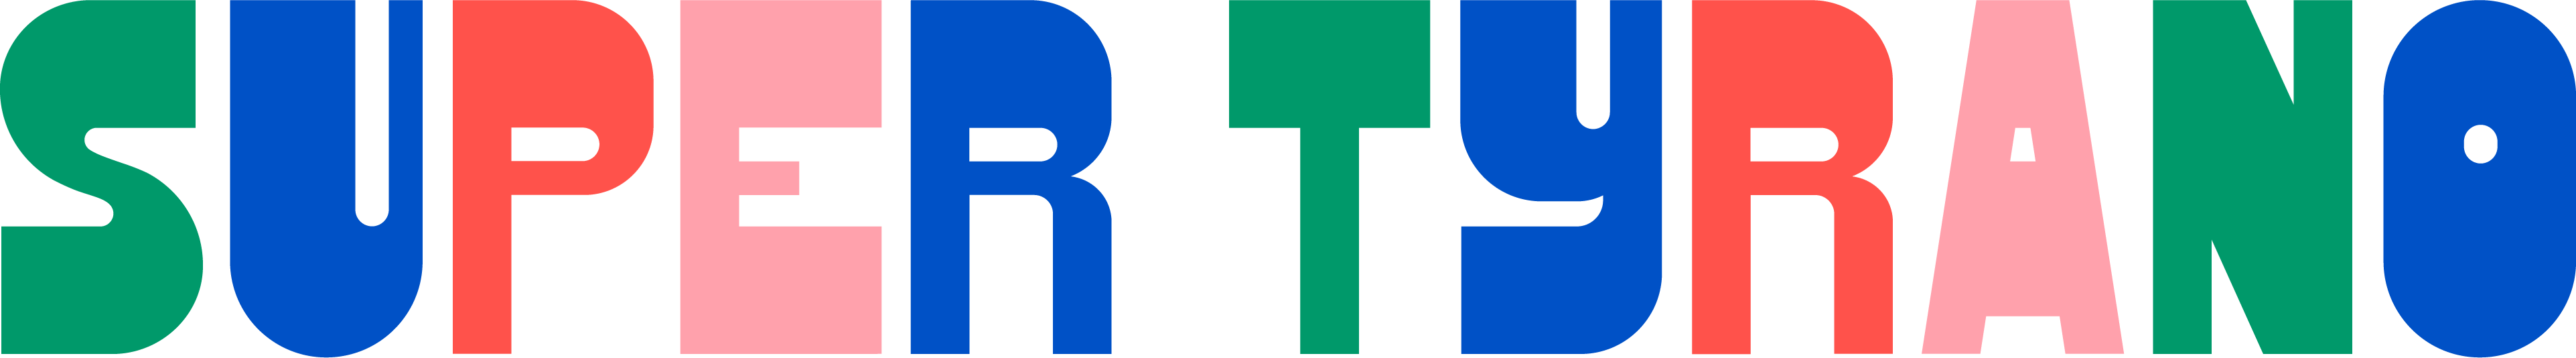 Logo Super Tyrano a color